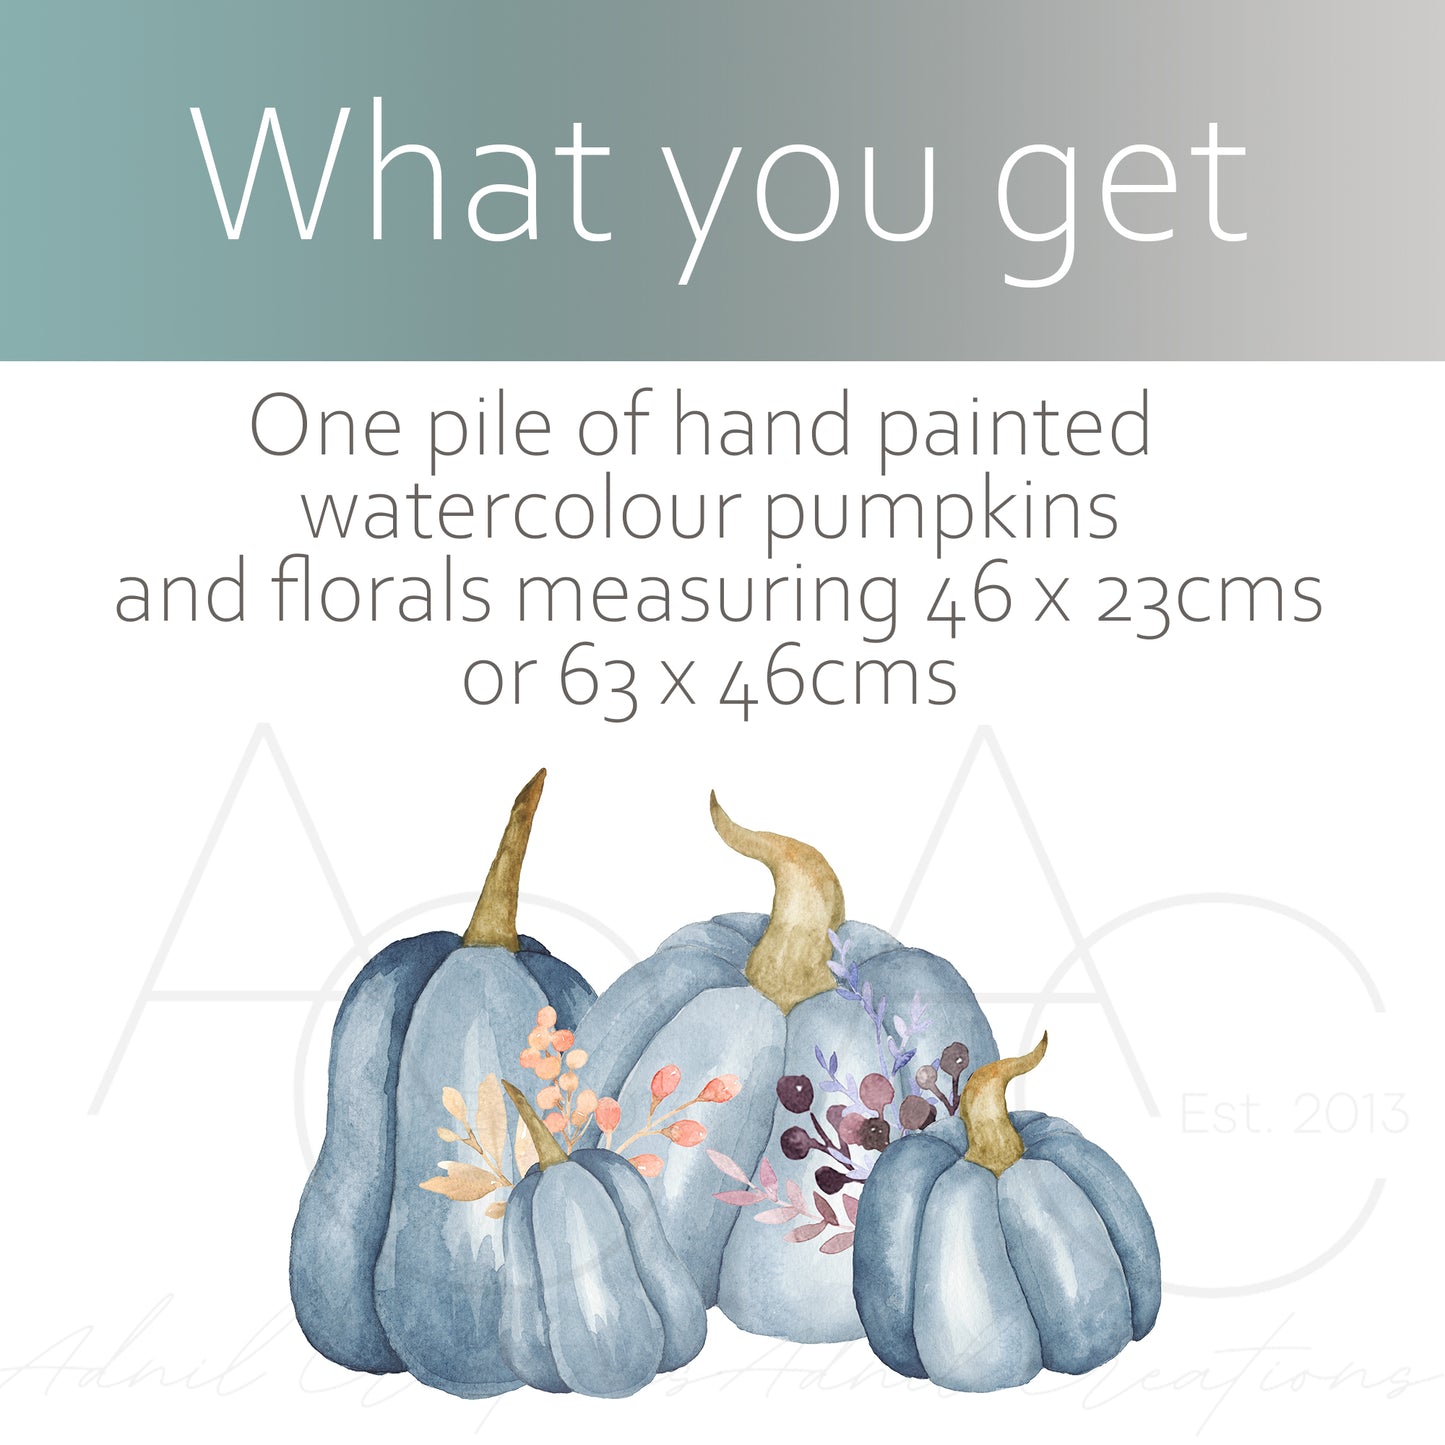 Watercolour pumpkins | Fabric wall stickers